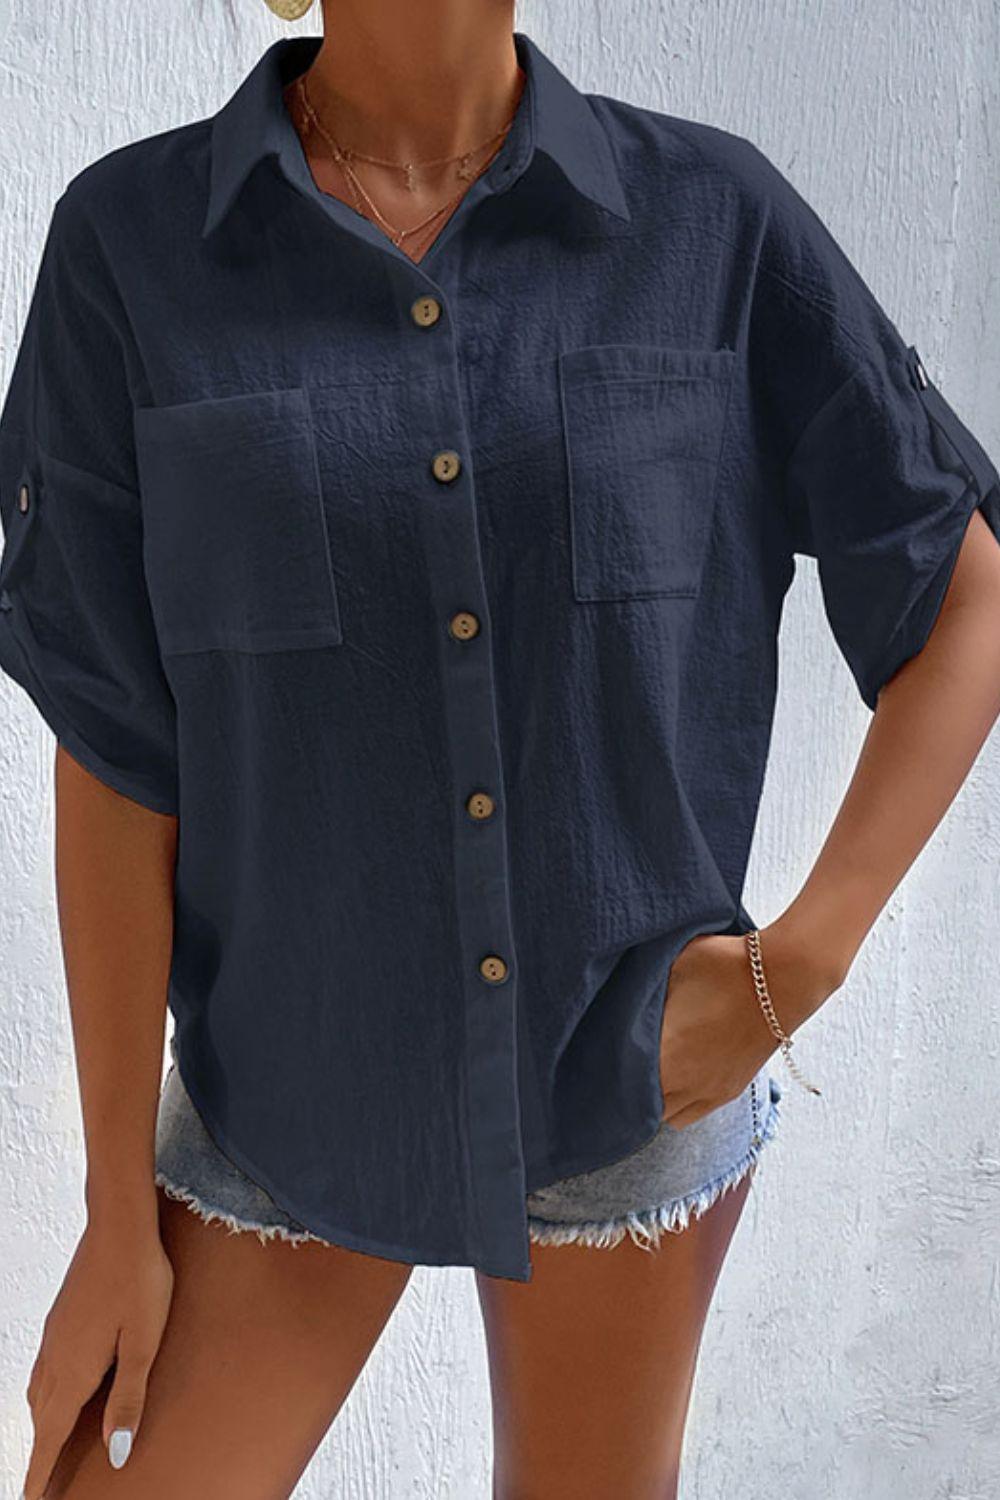 Roll-Tab Sleeve Shirt with Pockets - Flyclothing LLC